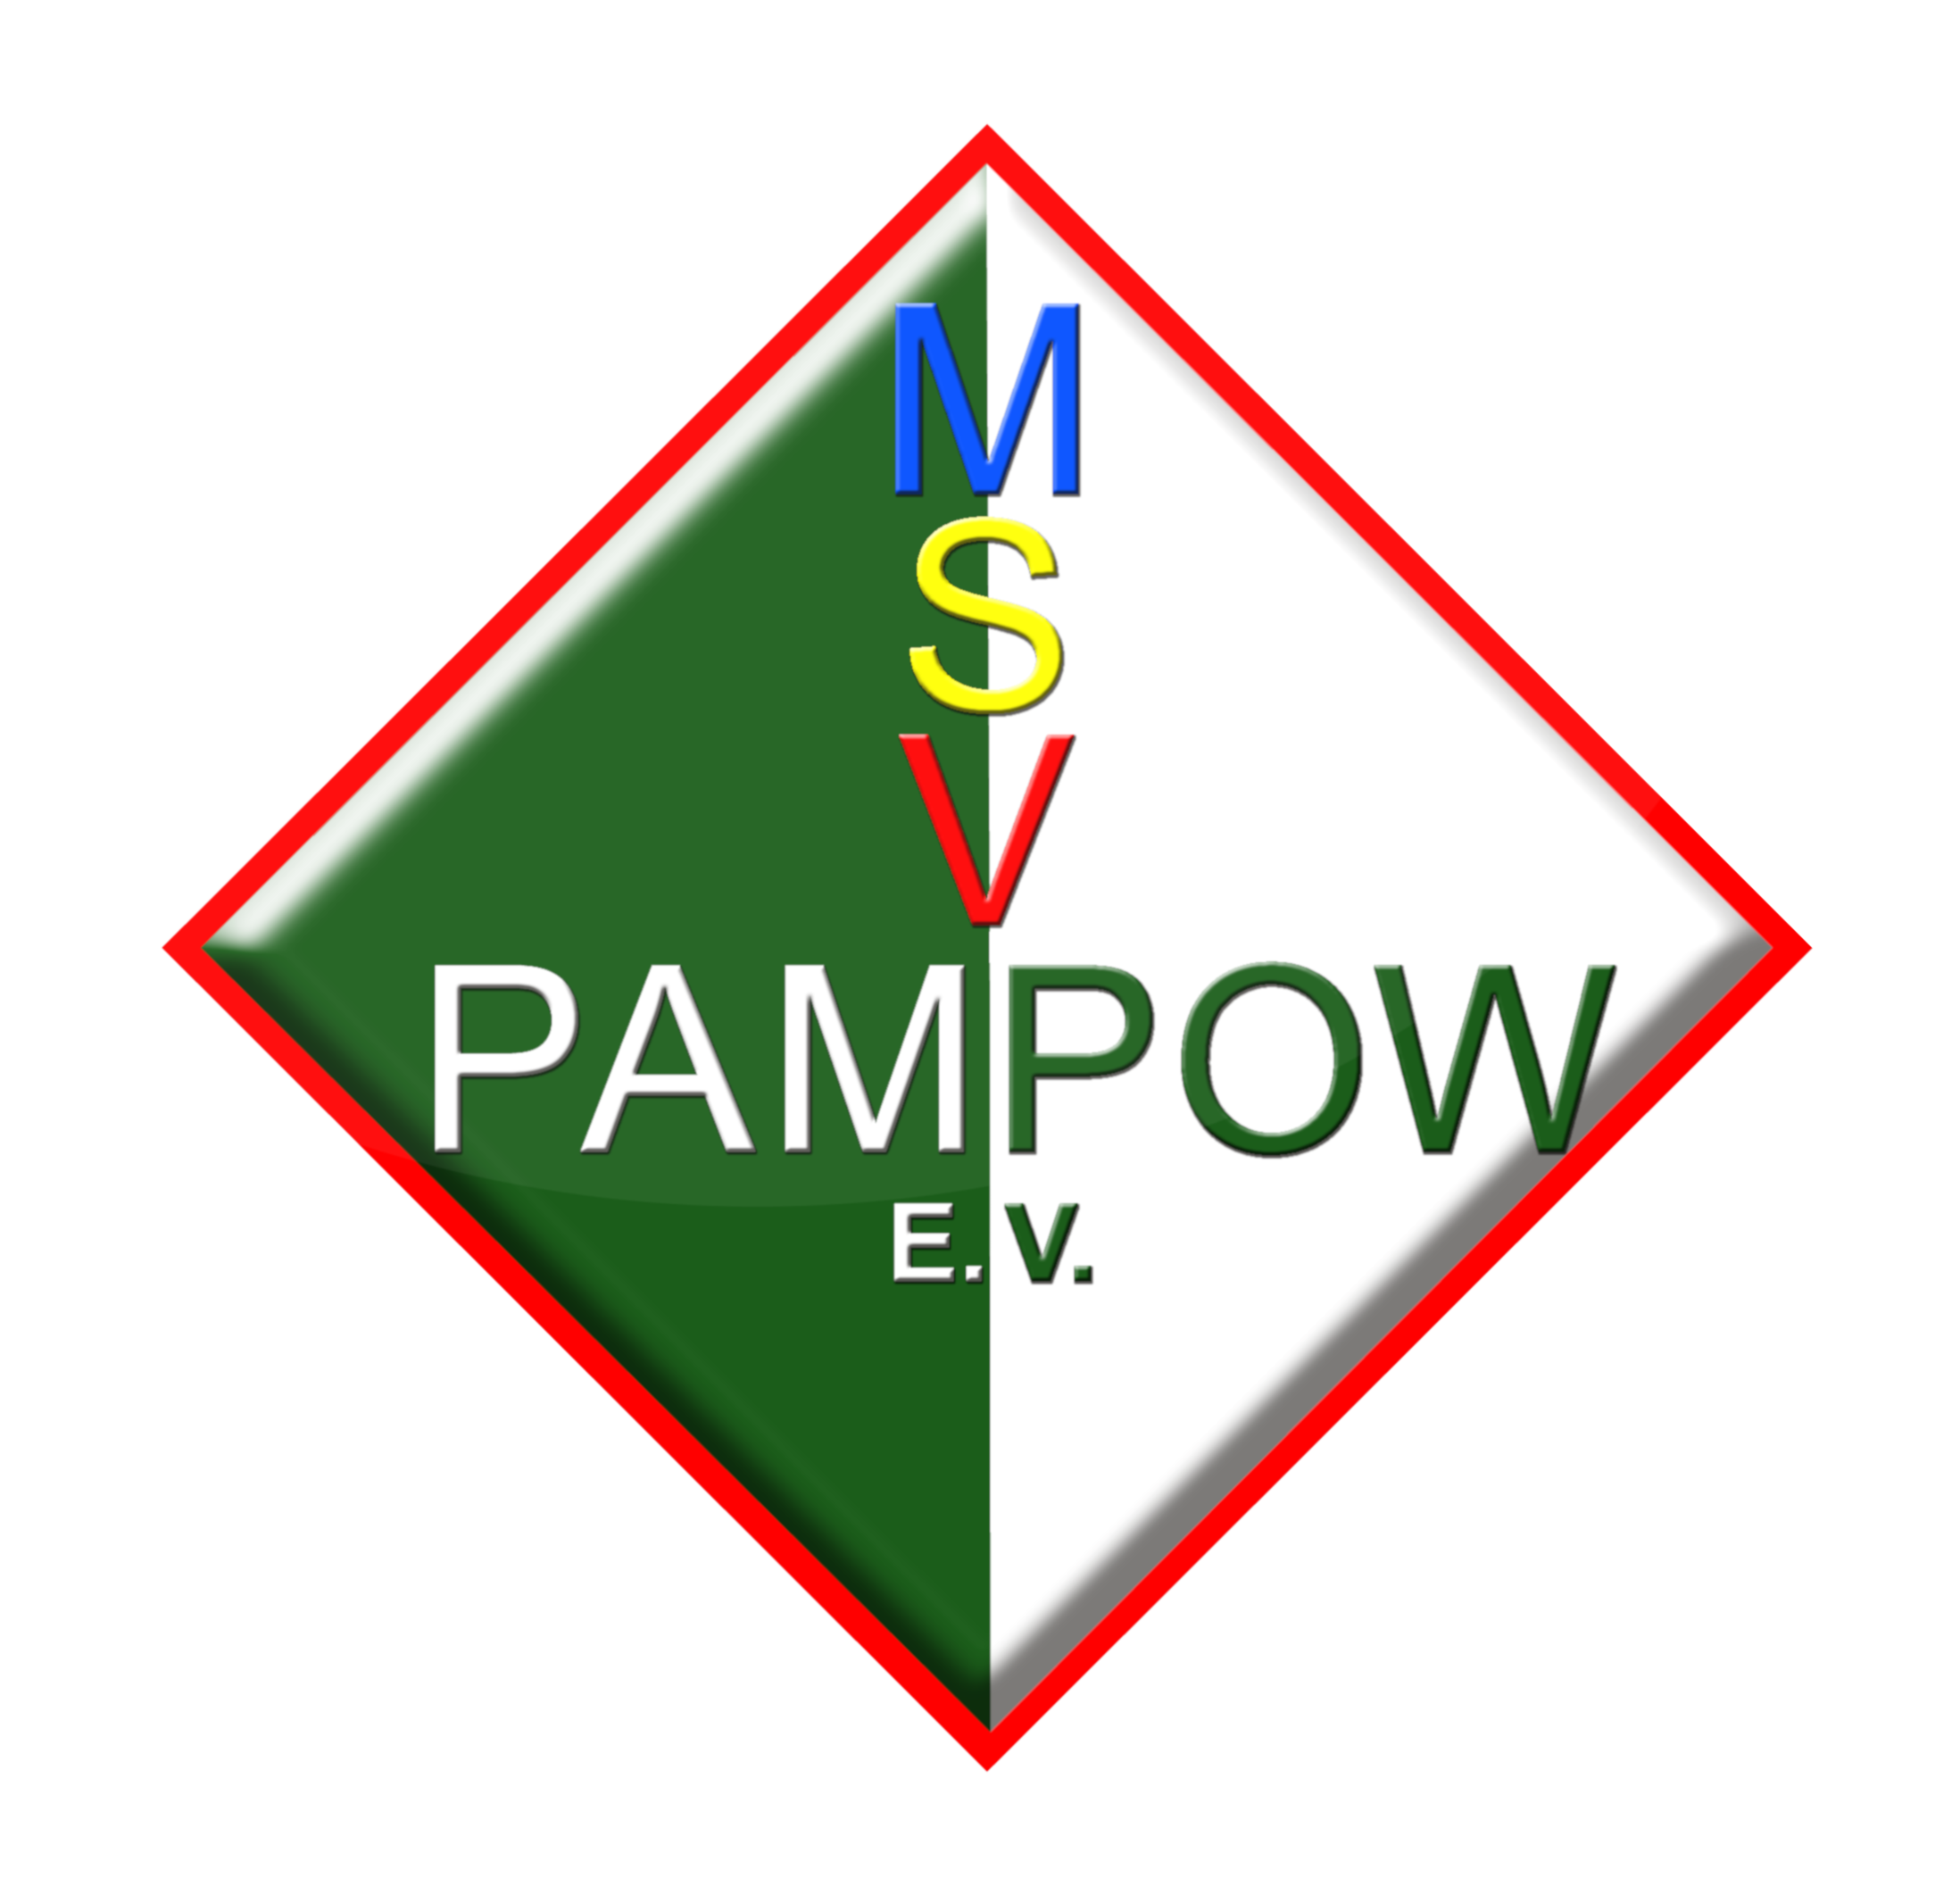 MSV Pampow team logo